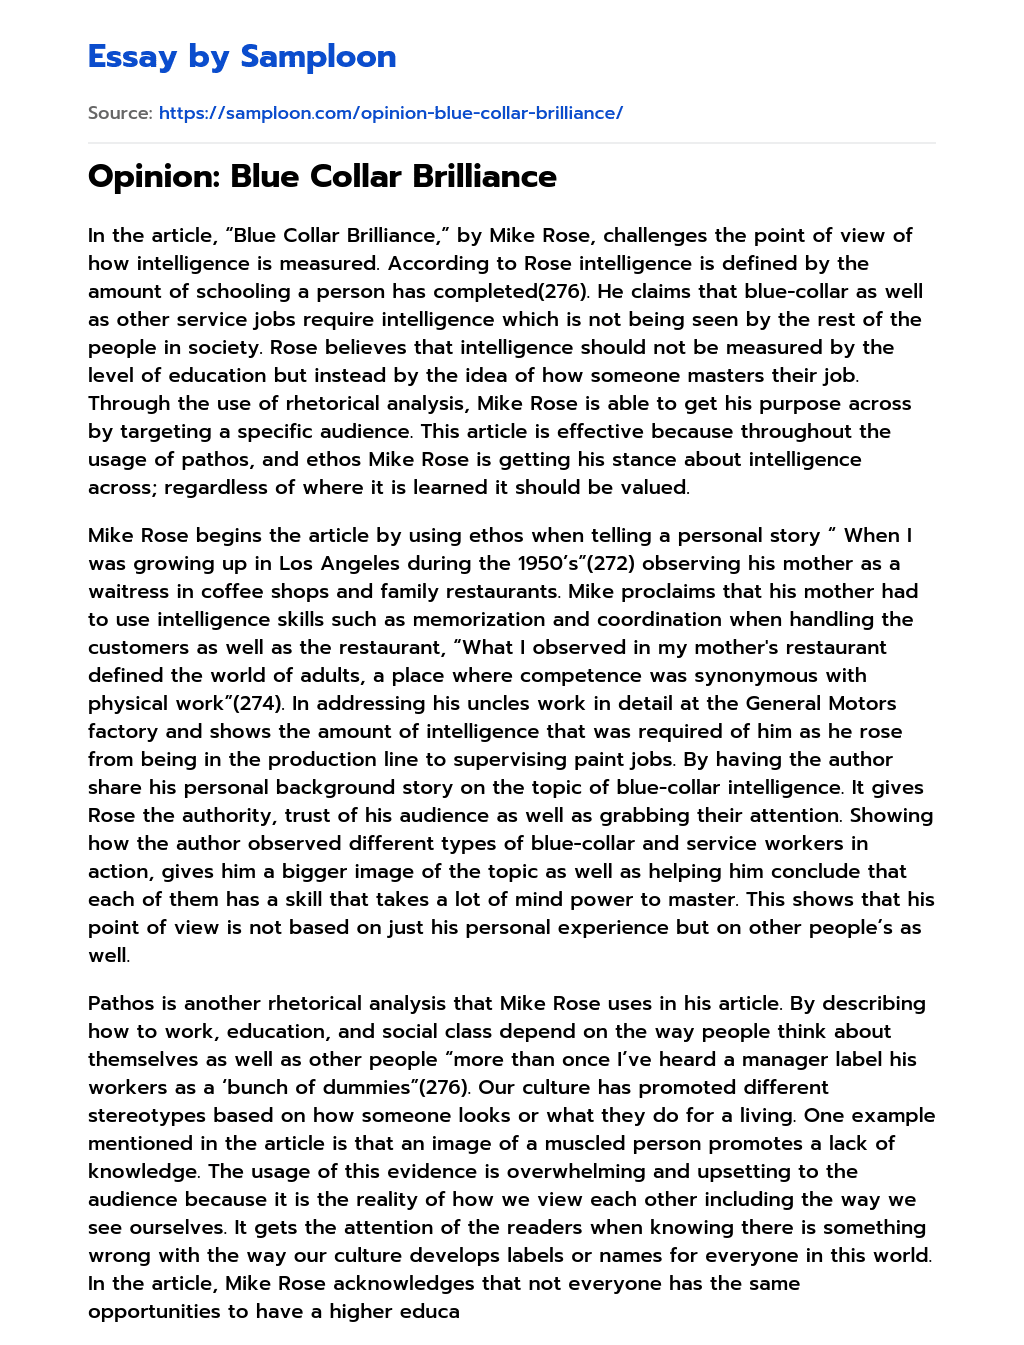 Opinion: Blue Collar Brilliance Analytical Essay essay